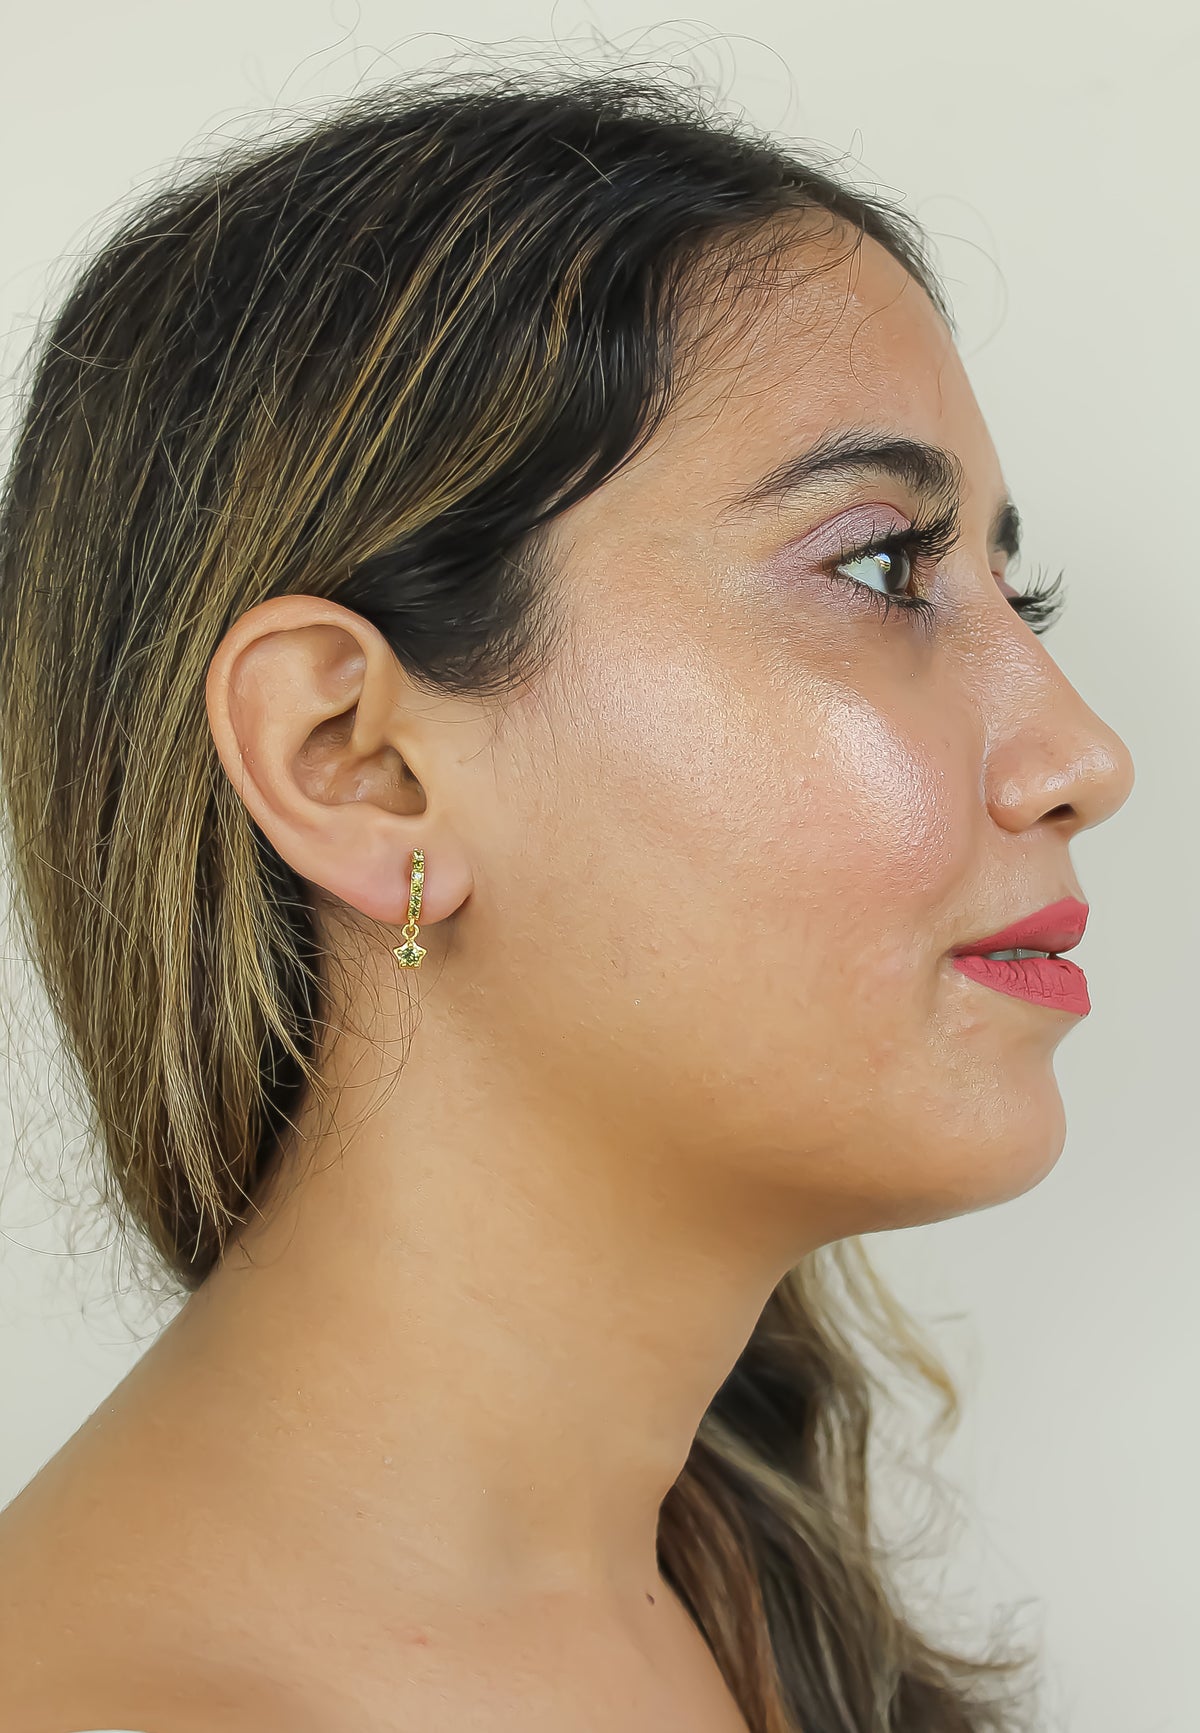 Crescent Moon Star Earrings